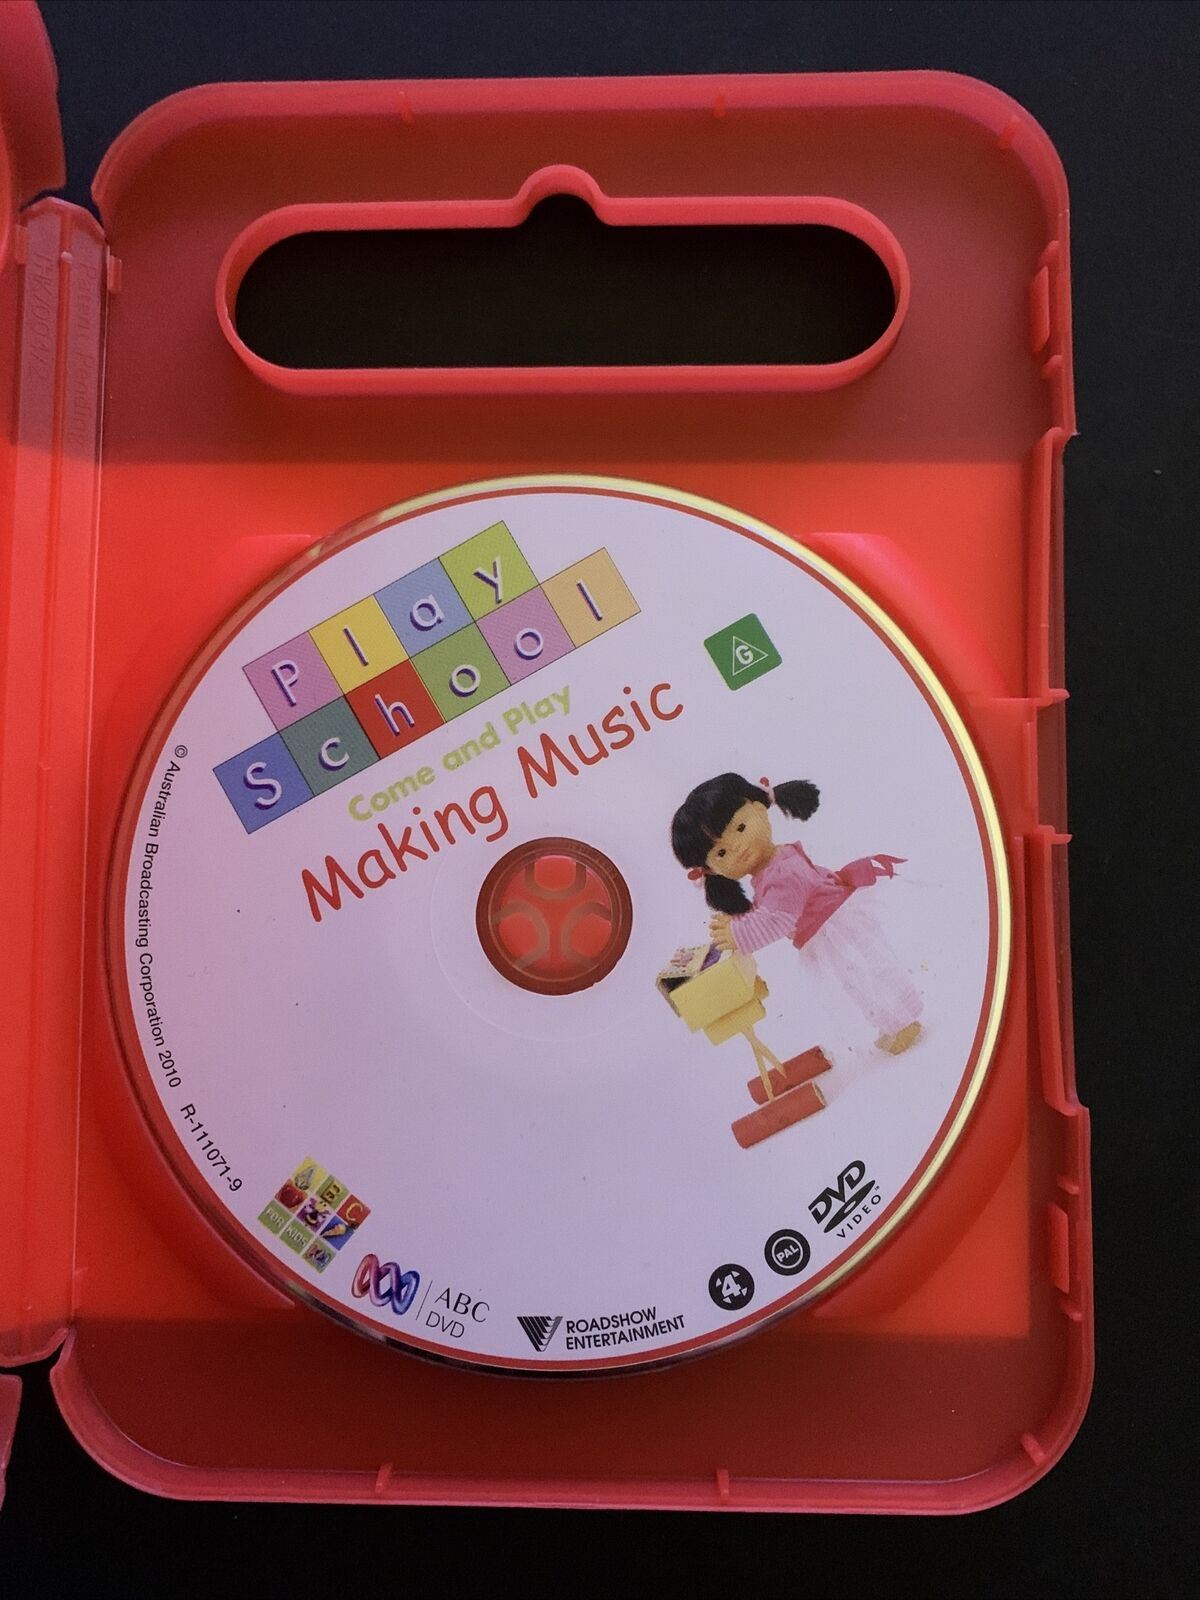 Play School - Making Music (DVD, 2010) All Regions